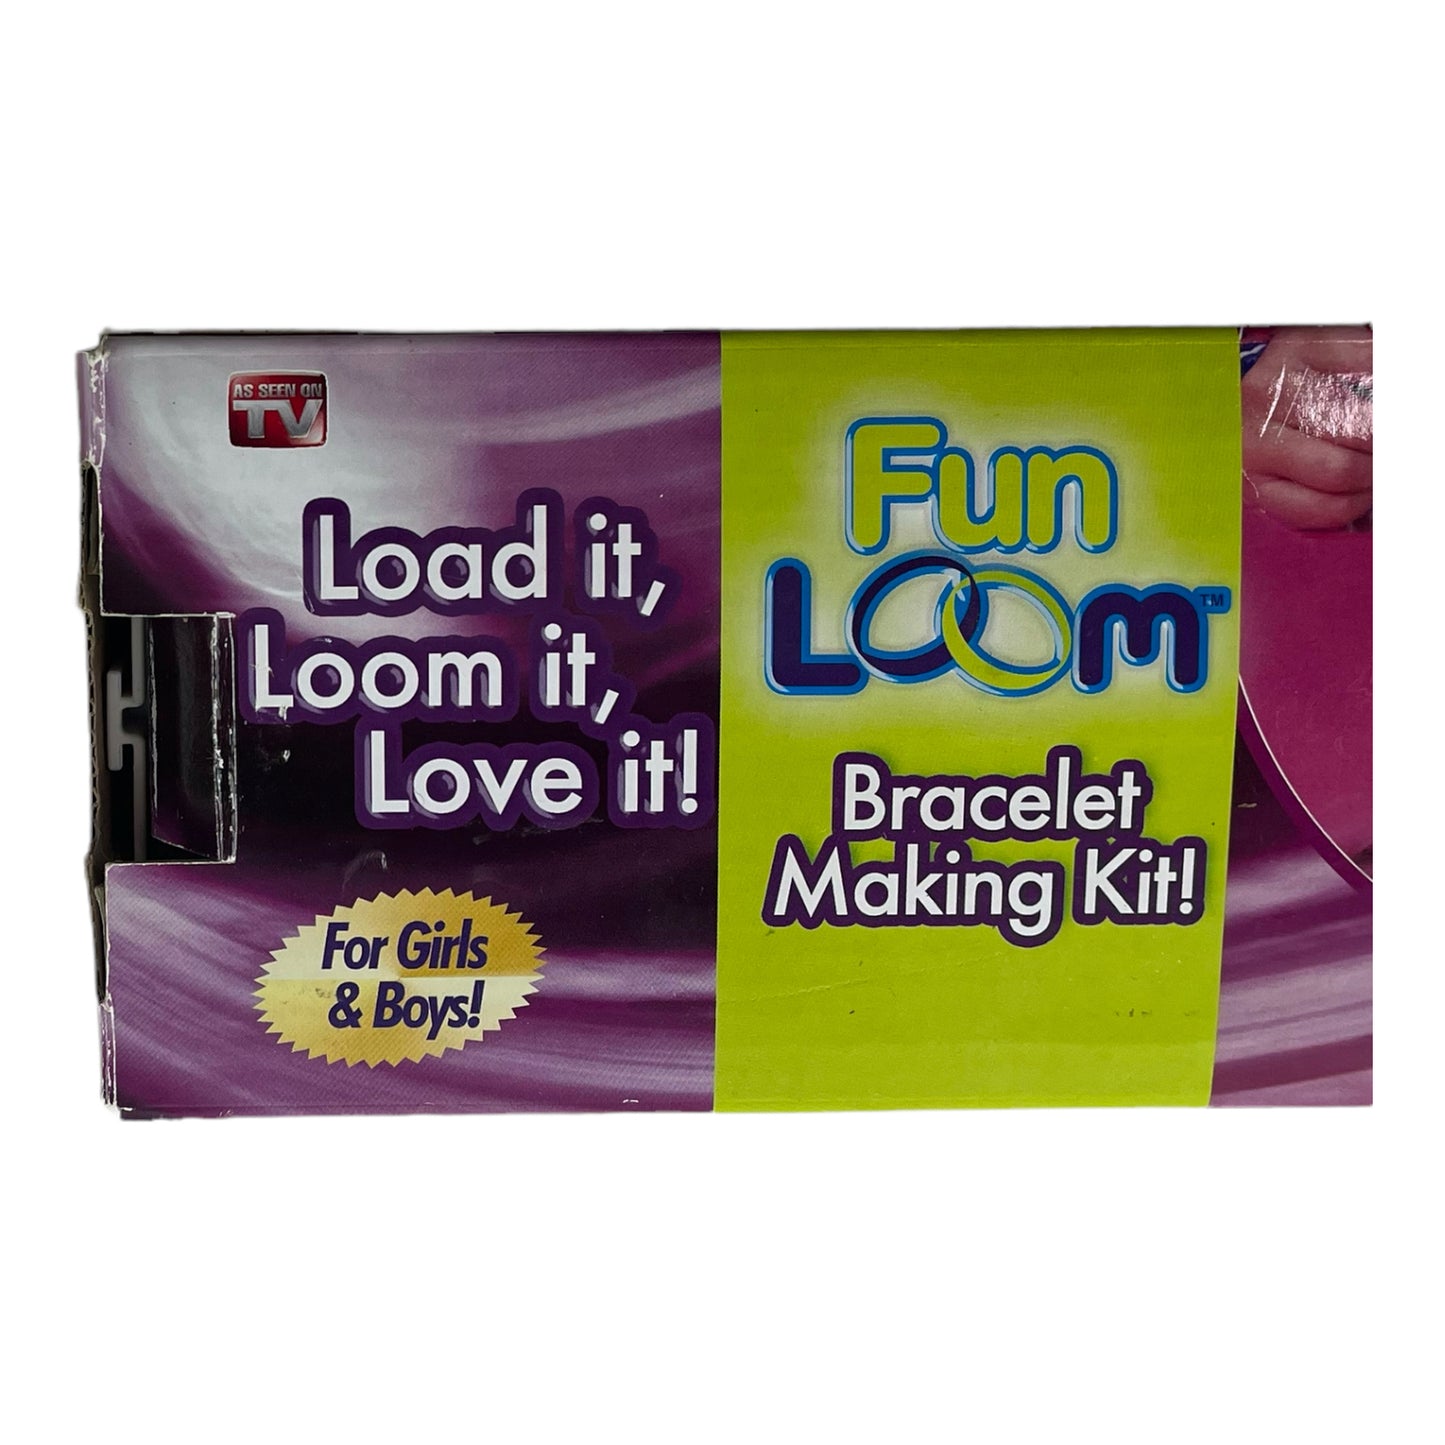 Fun Loom Bracelet Making Kit New in Package